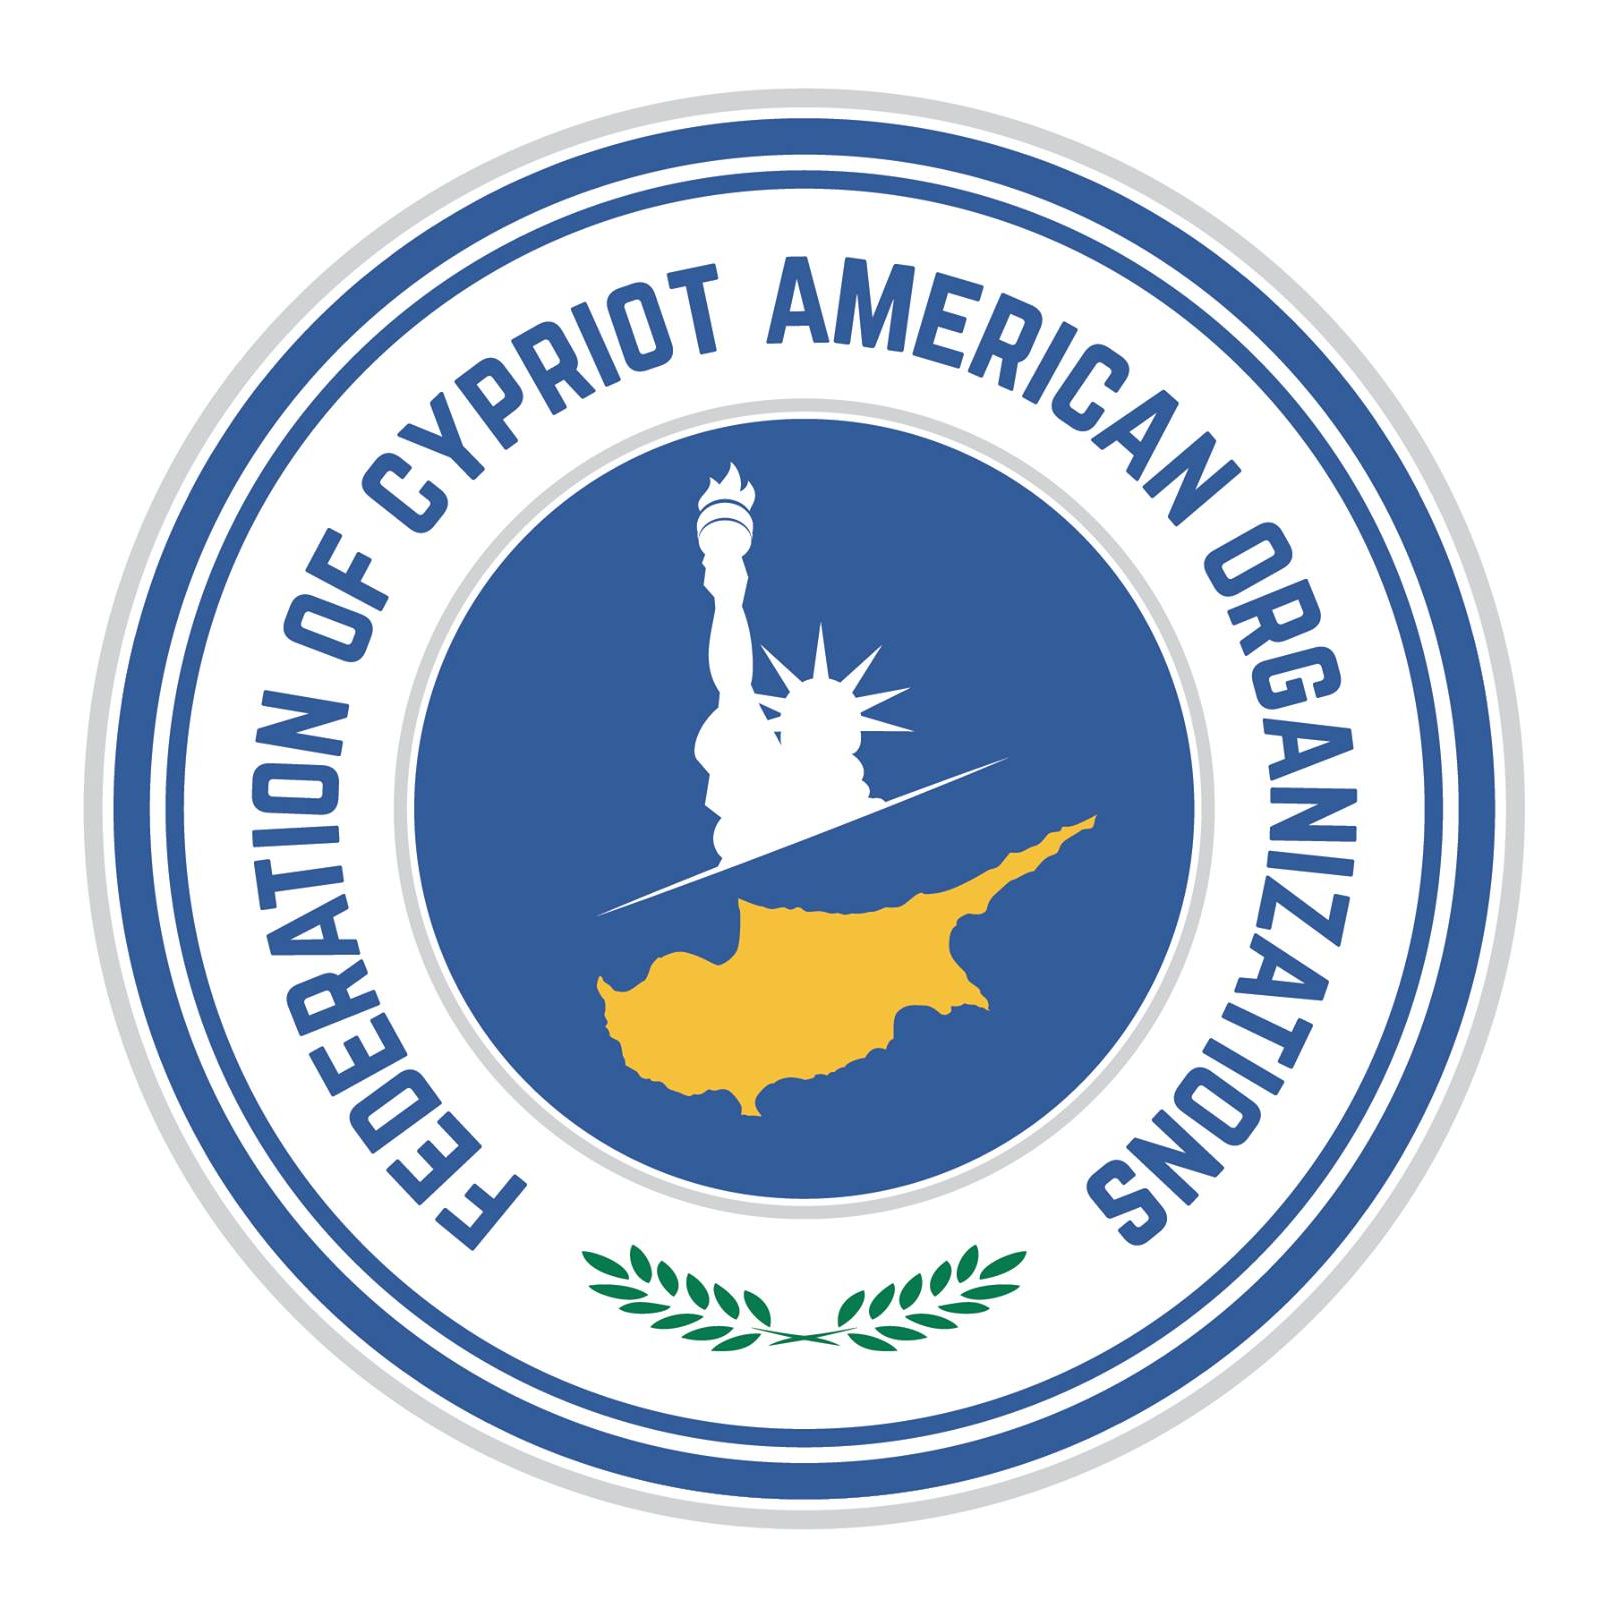 Greek Speaking Organization in New York New York - Federation of Cypriot American Organizations